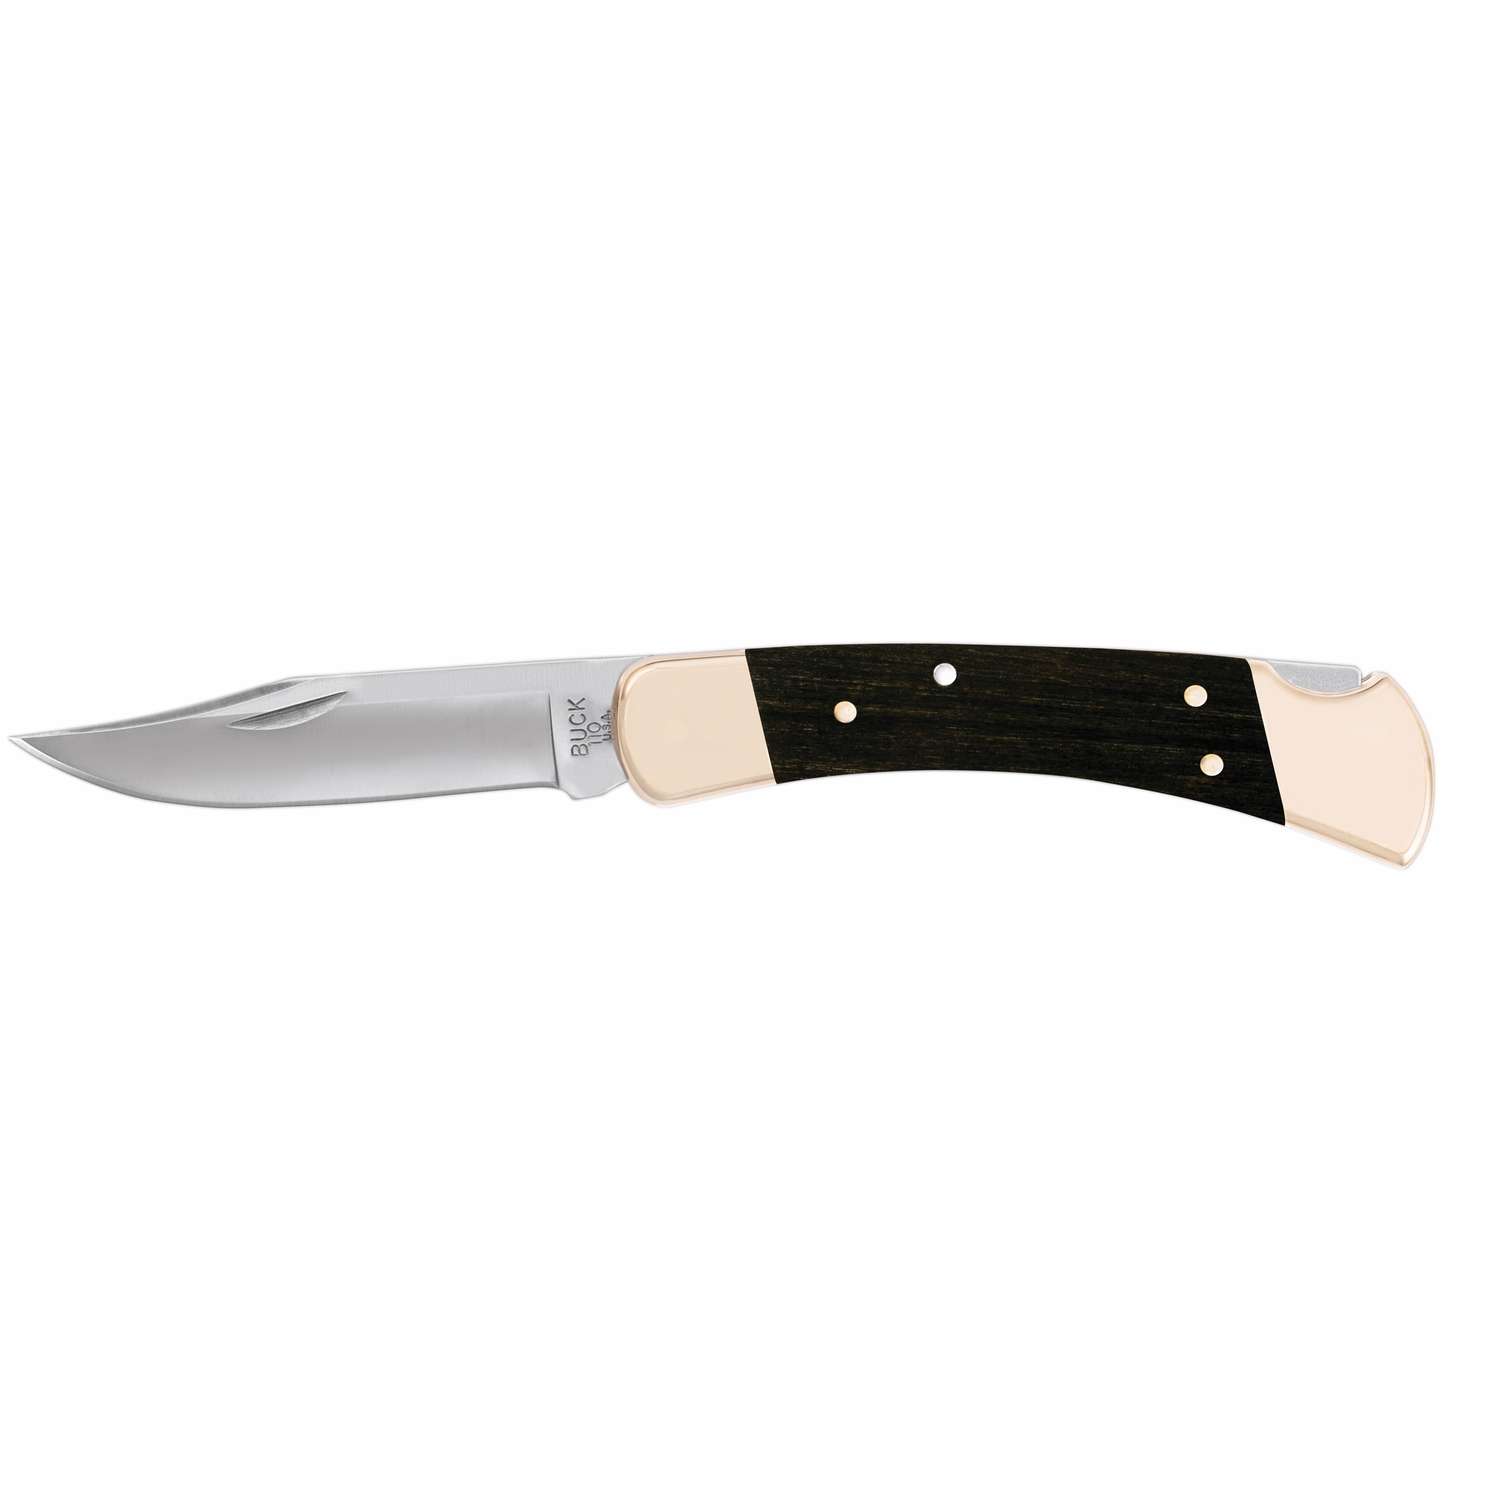 The game-changing Buck 110 Folding Hunter knife